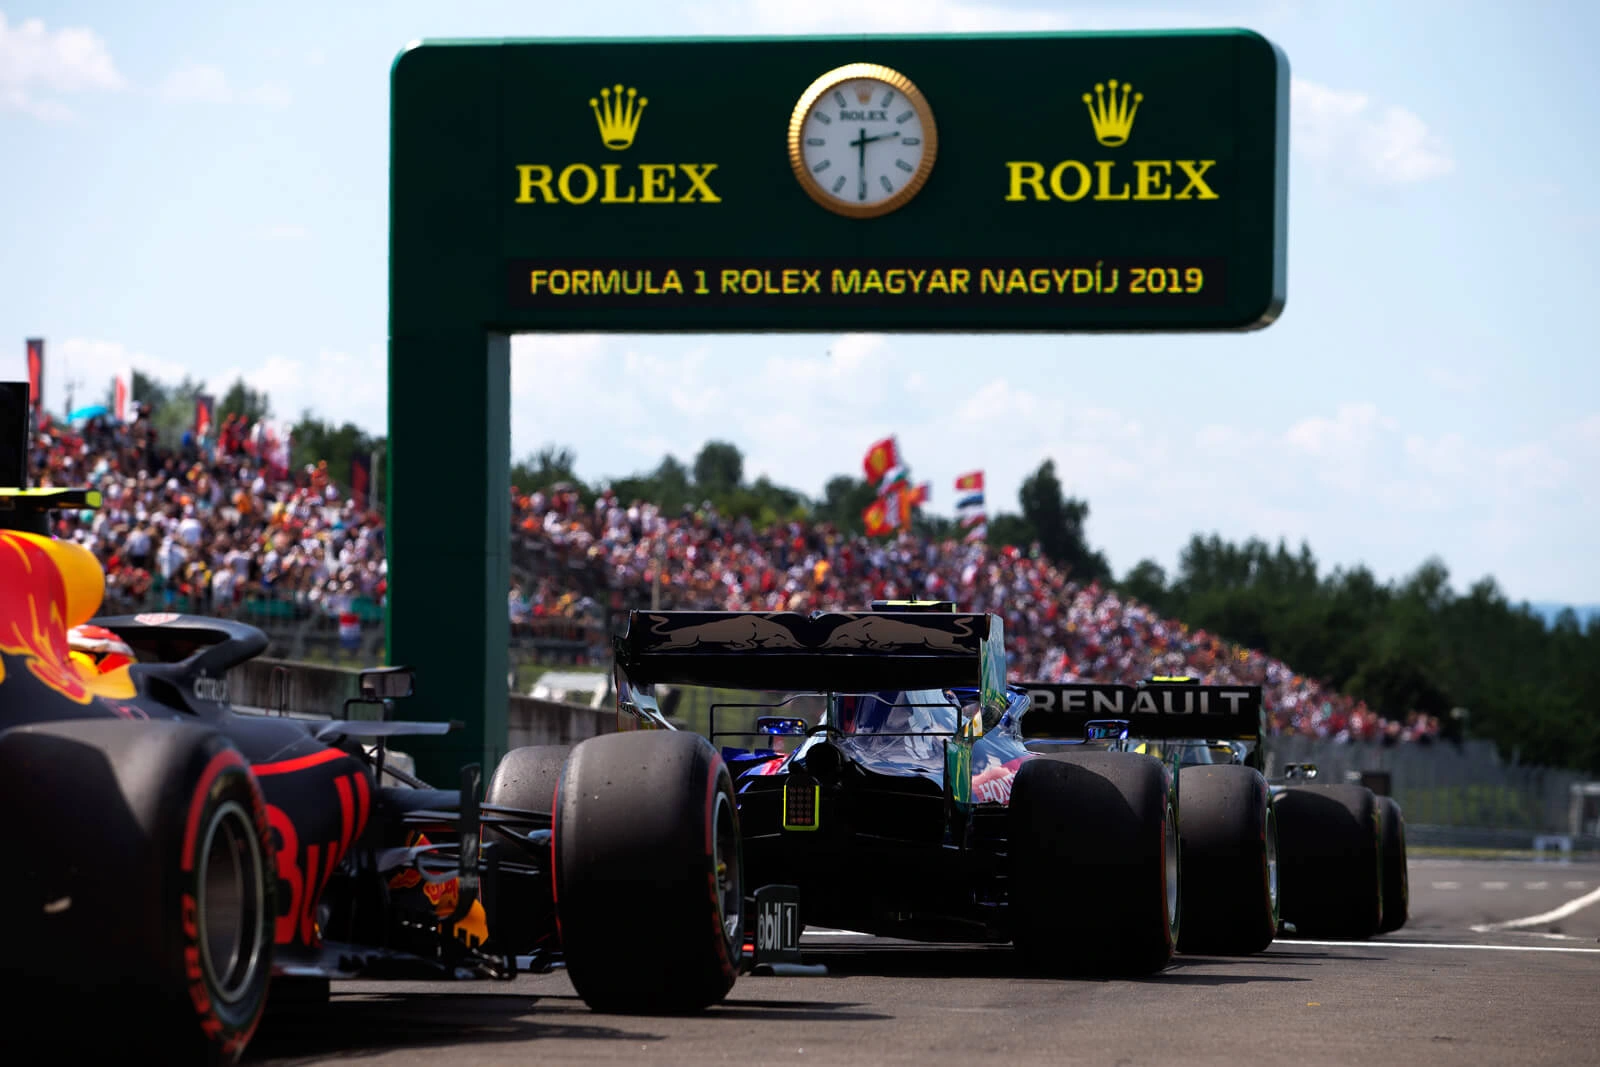 Rolex And Formula 1